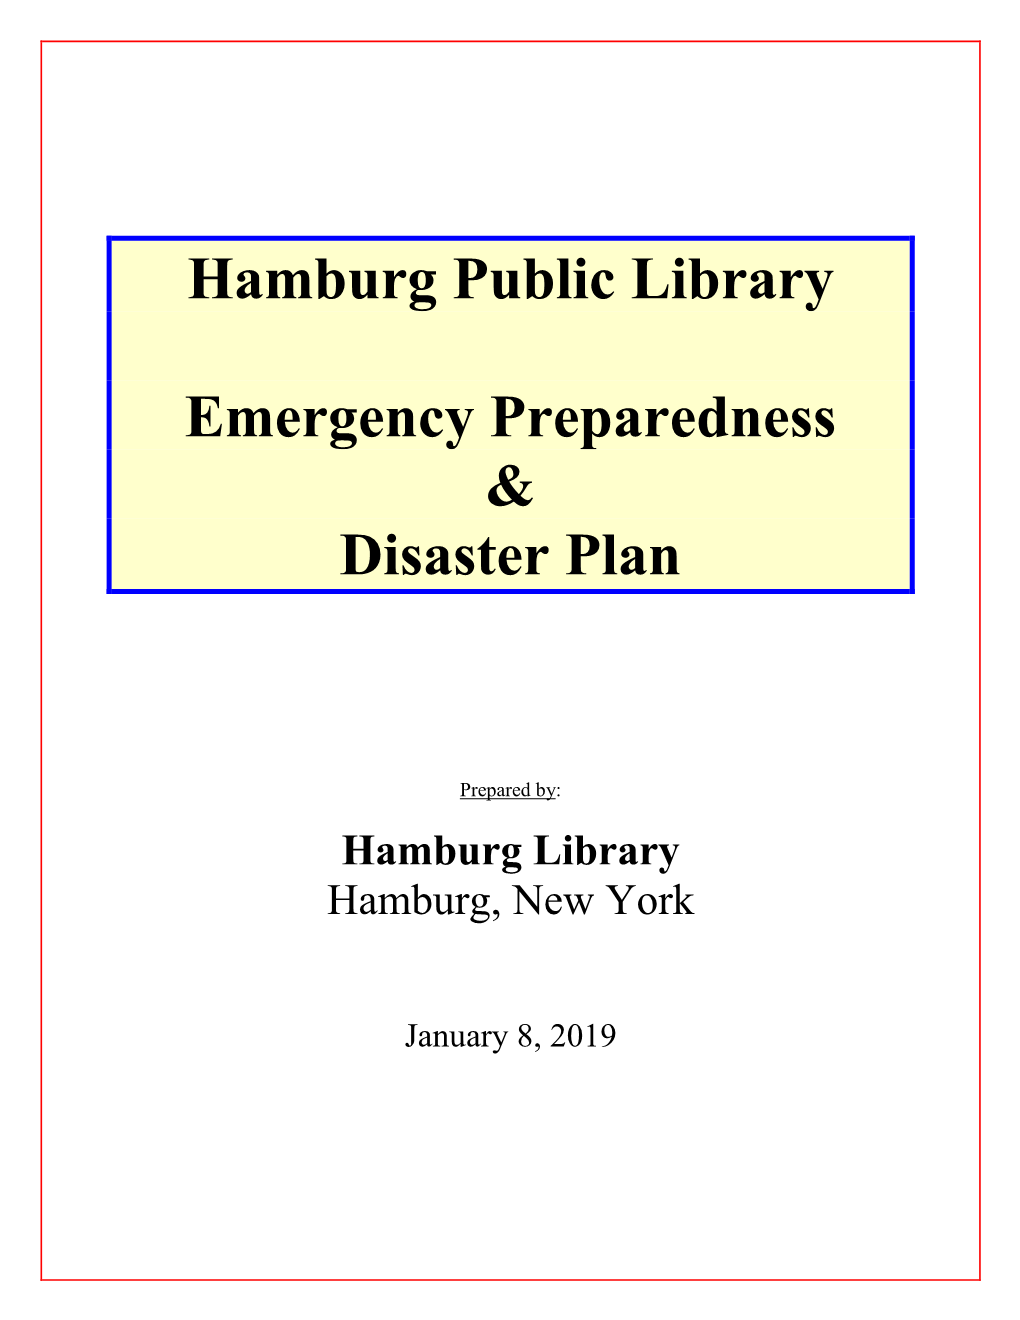 Hamburg Public Library Emergency Preparedness & Disaster Plan